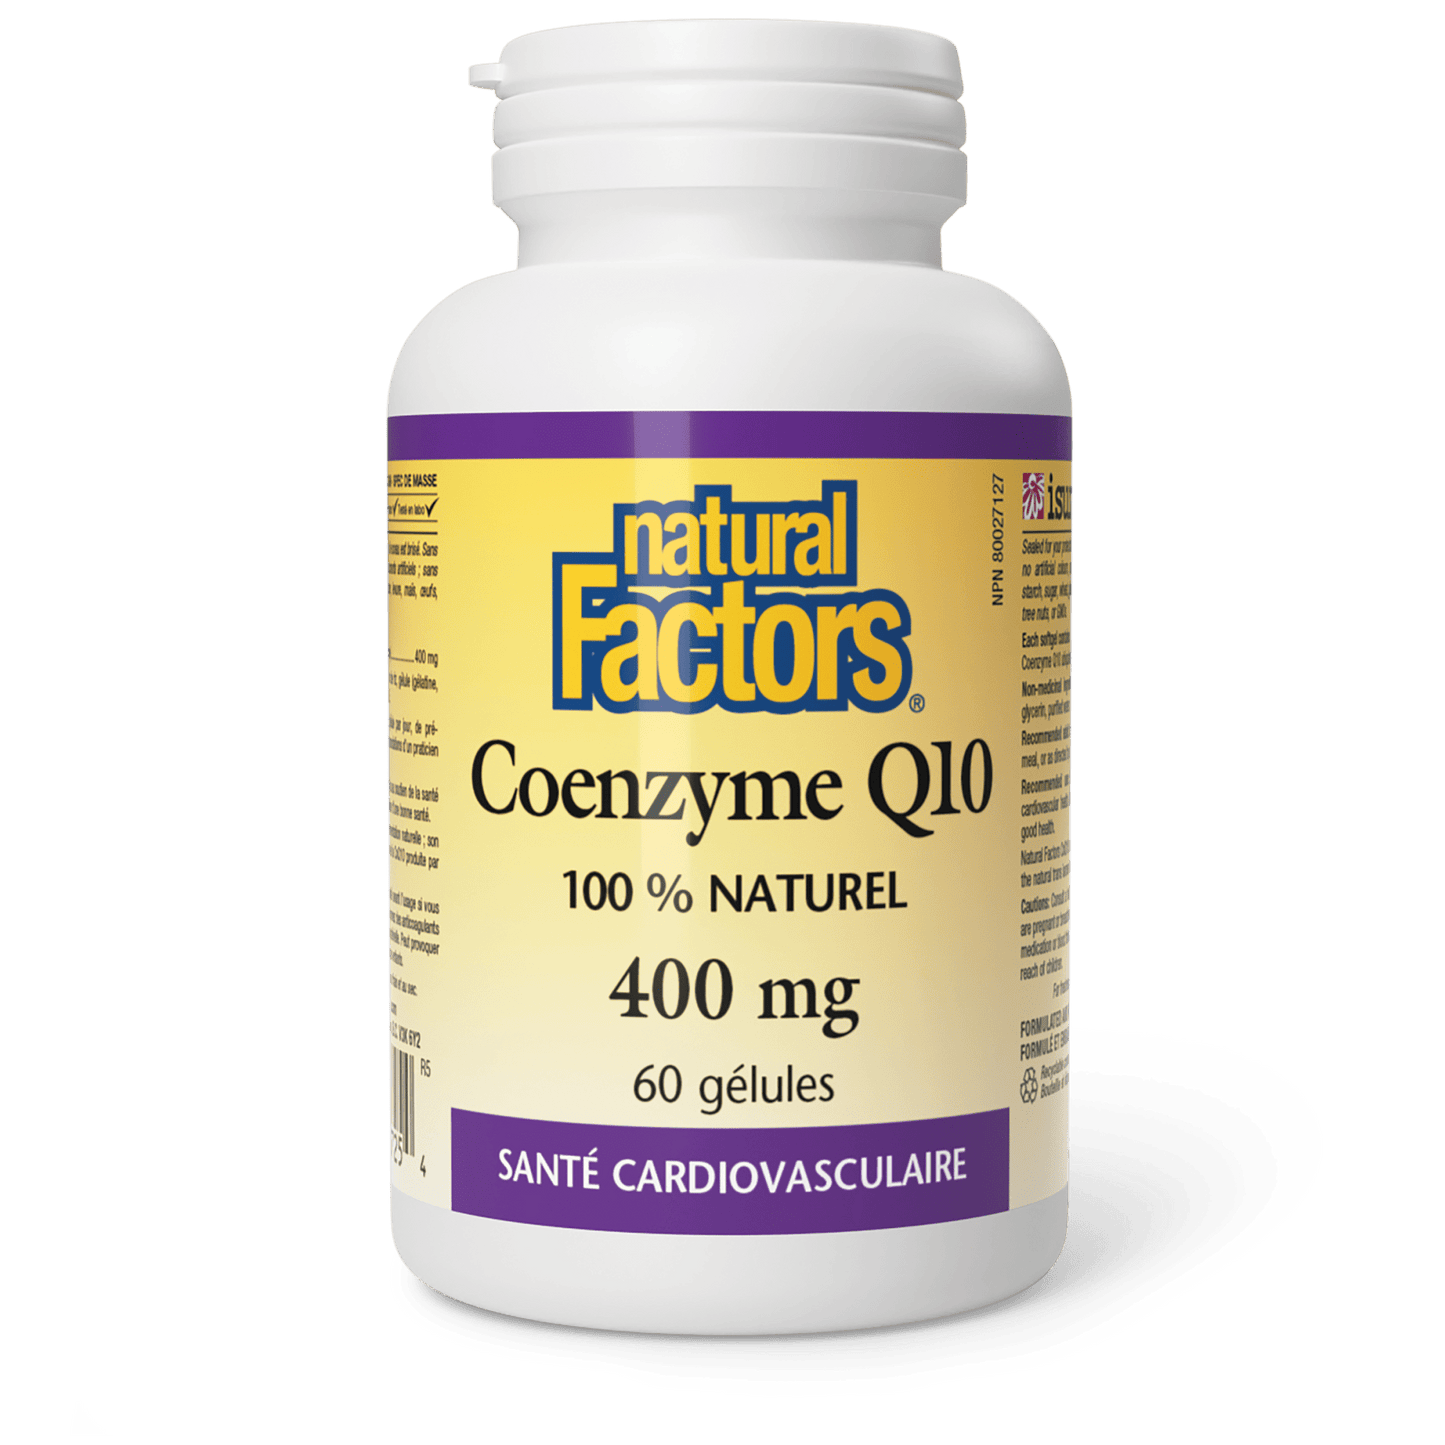 Coenzyme Q10 100 % naturel 400 mg, Natural Factors|v|image|20725